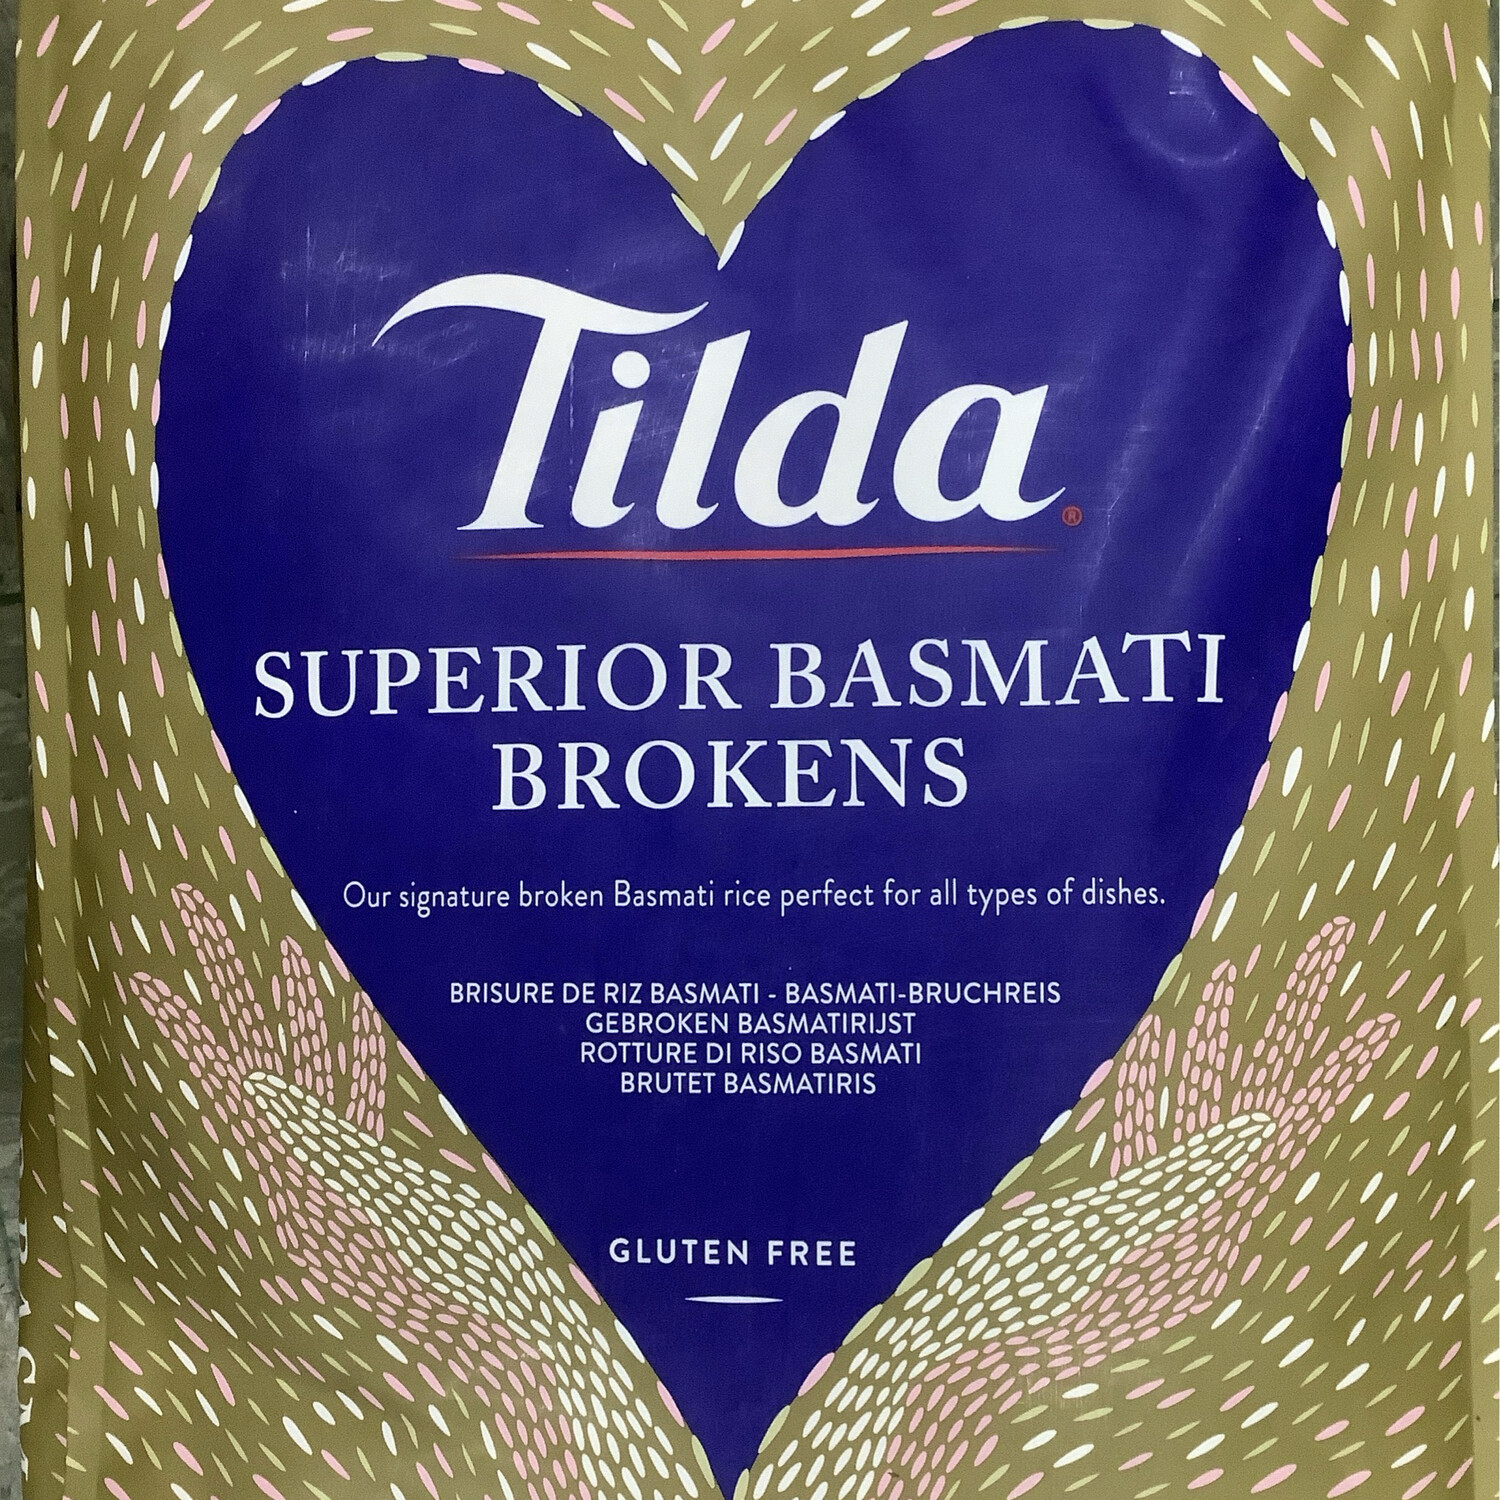 Tilda broken basmati rice 20kg